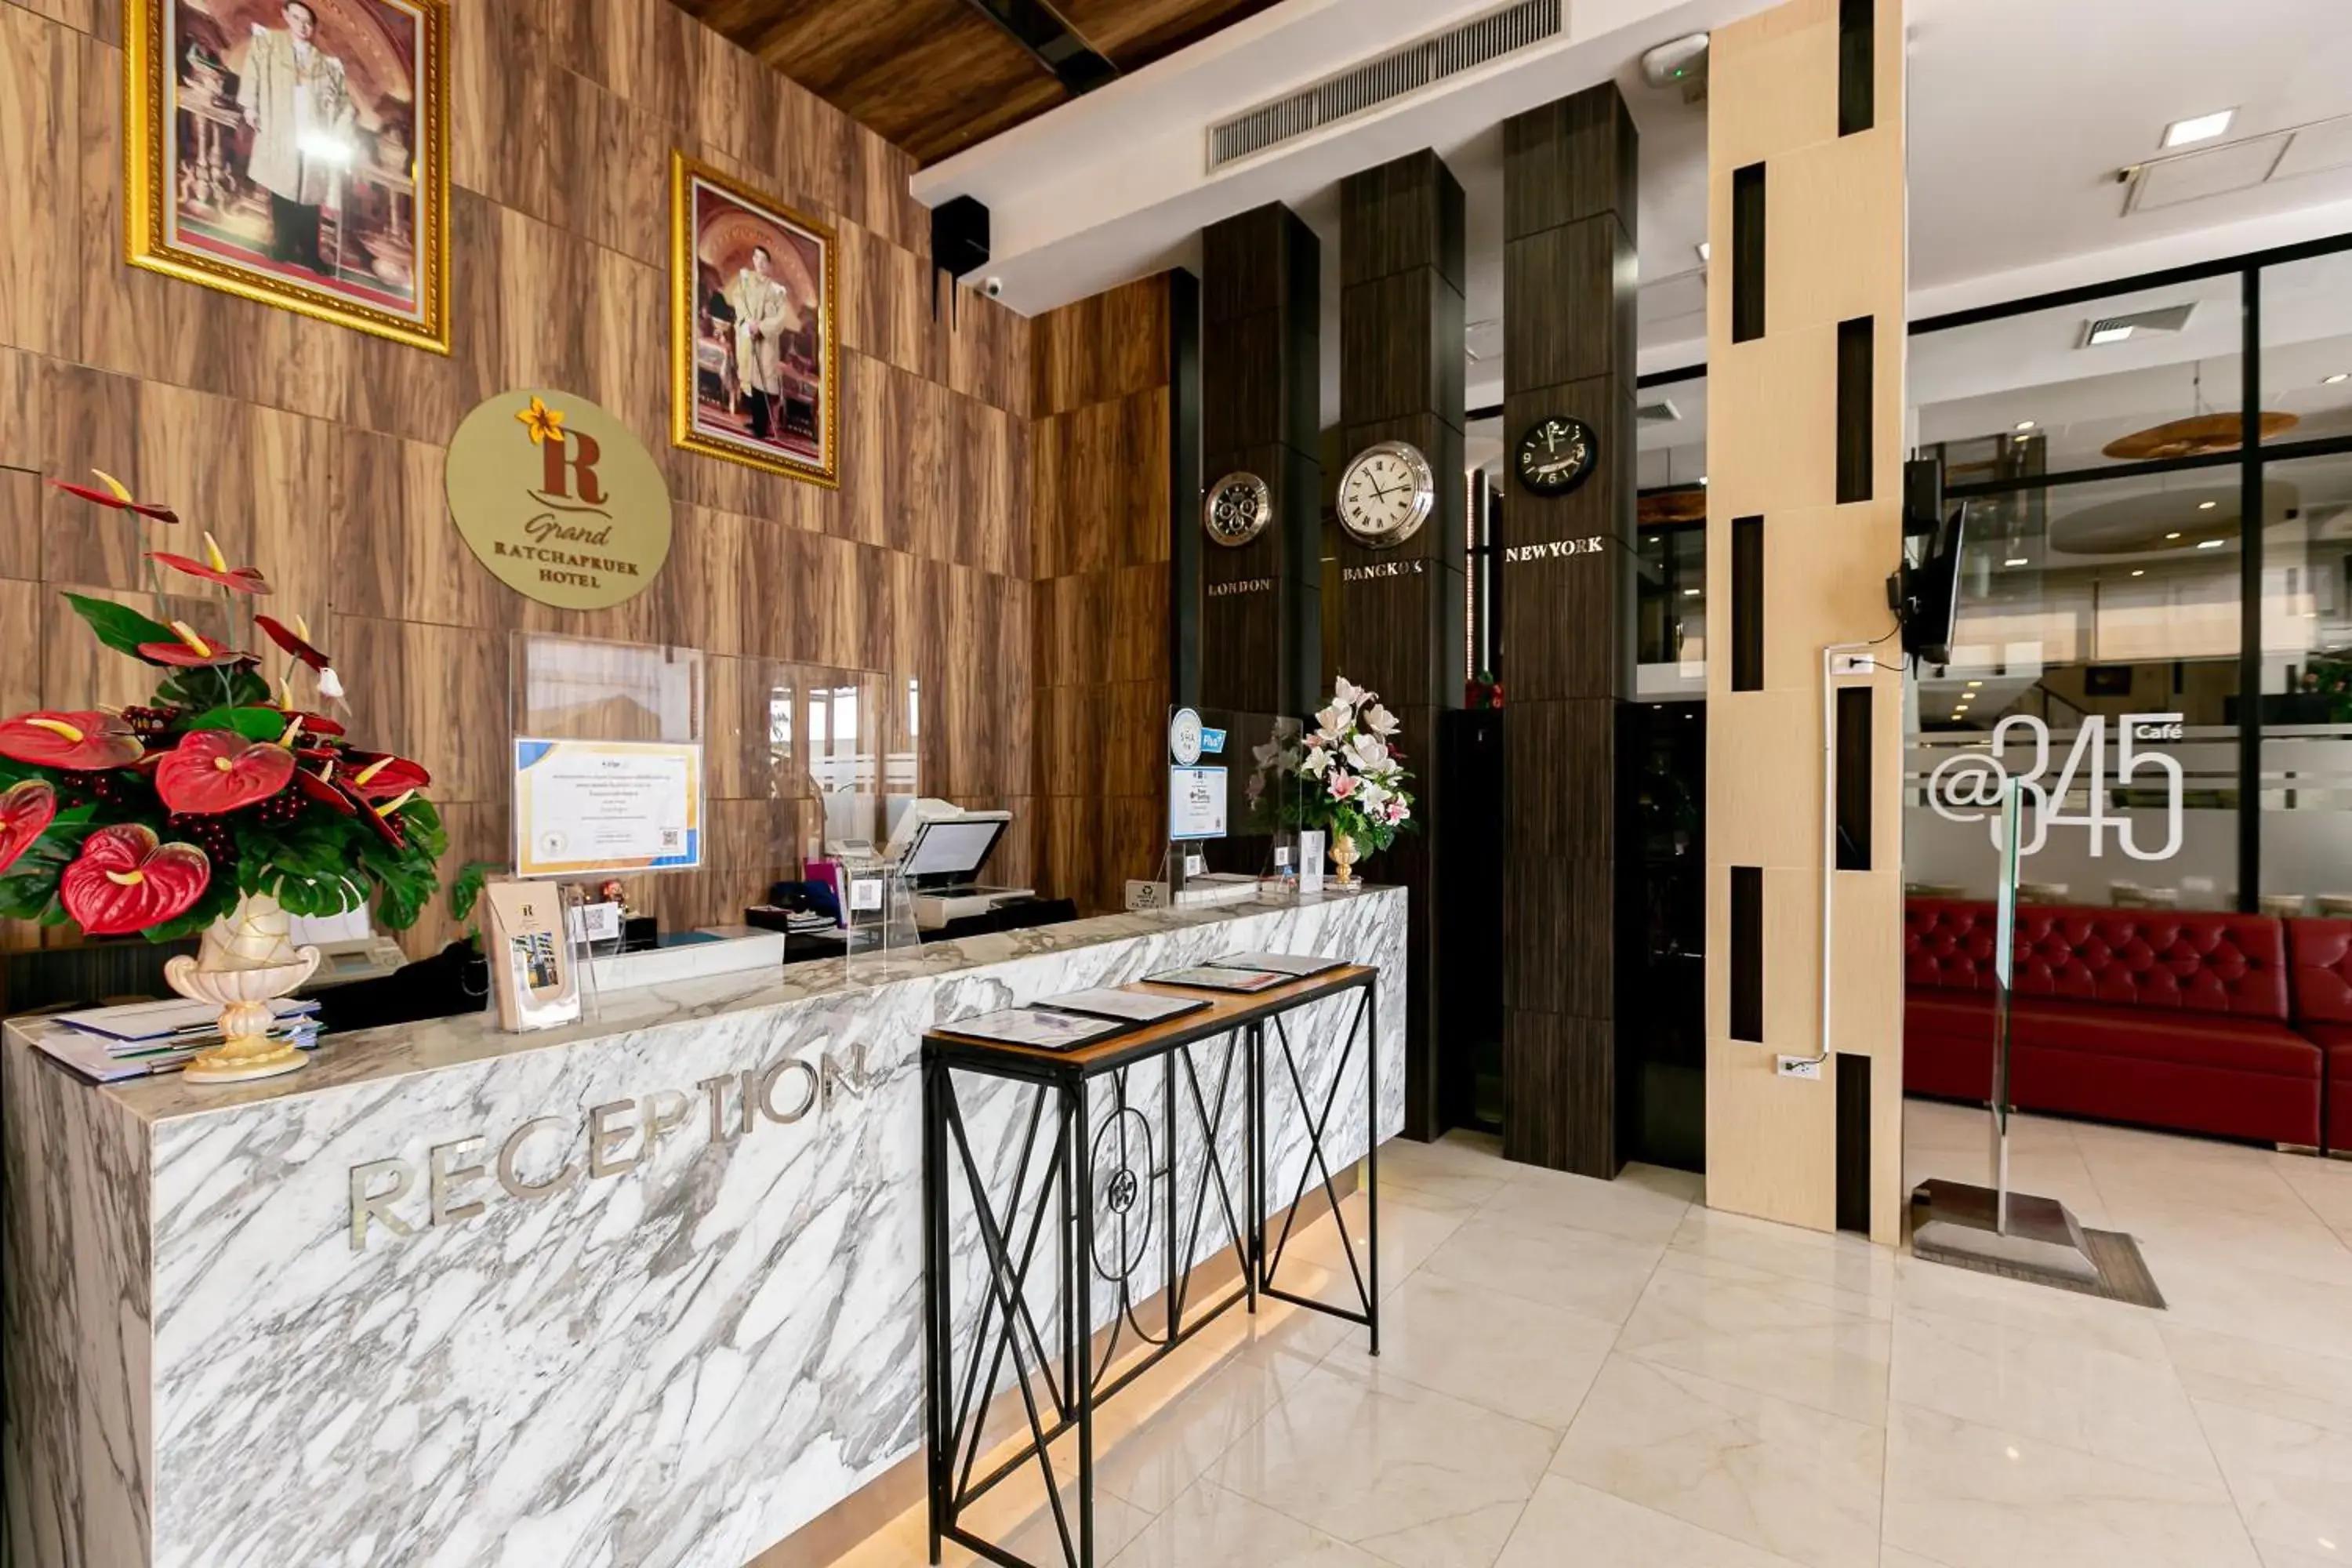 Lobby or reception in Grand Ratchapruek Hotel